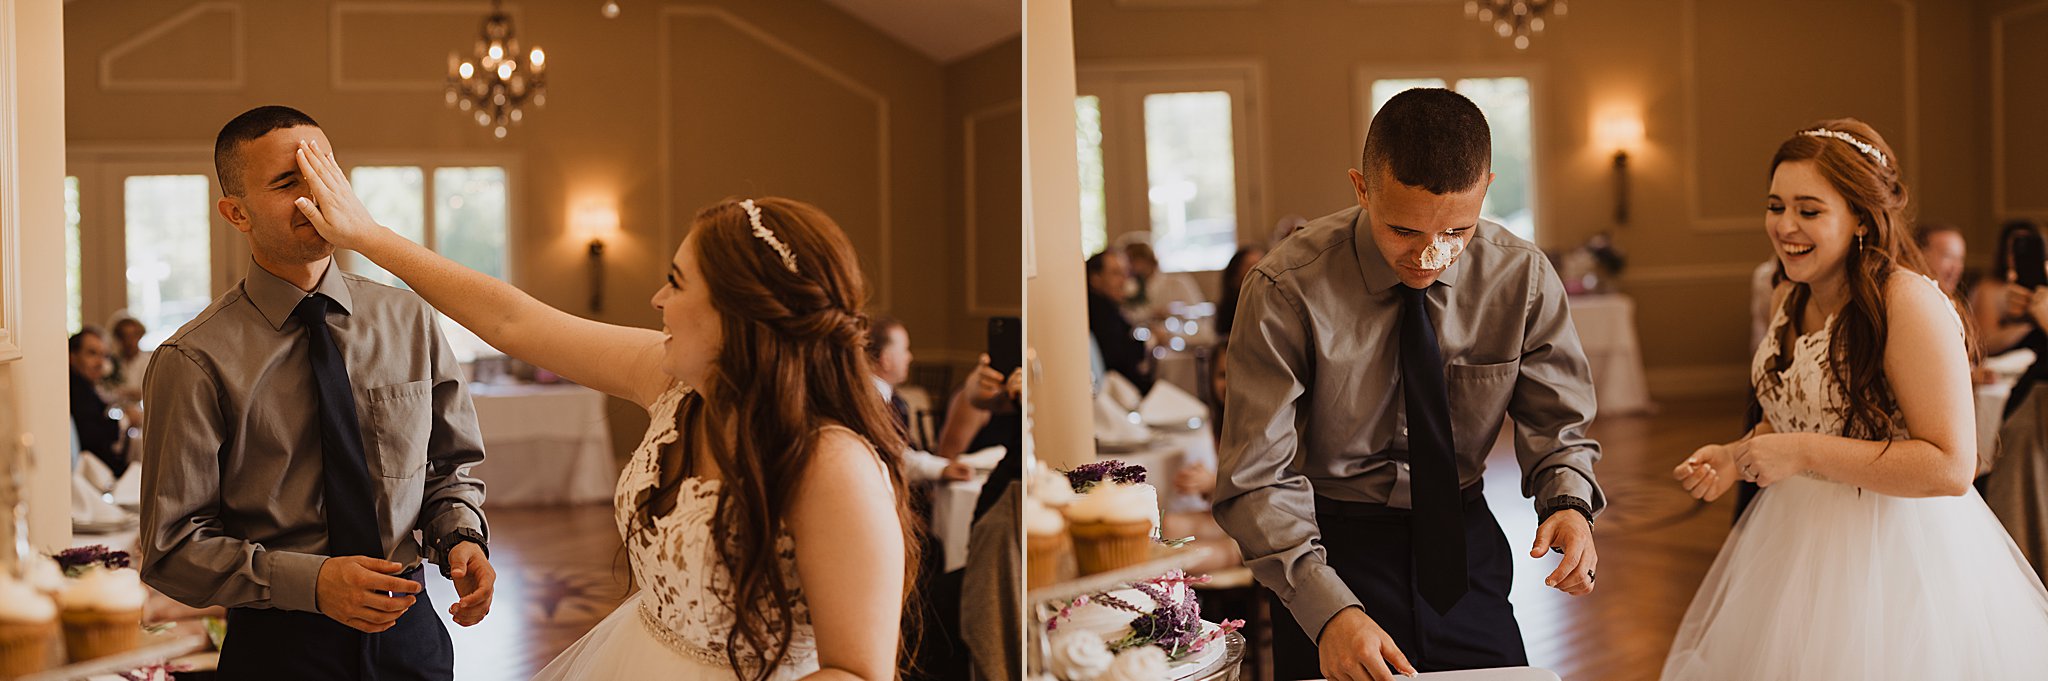 Missouri Winery Wedding | Abby Rose Photography | Cake Cutting